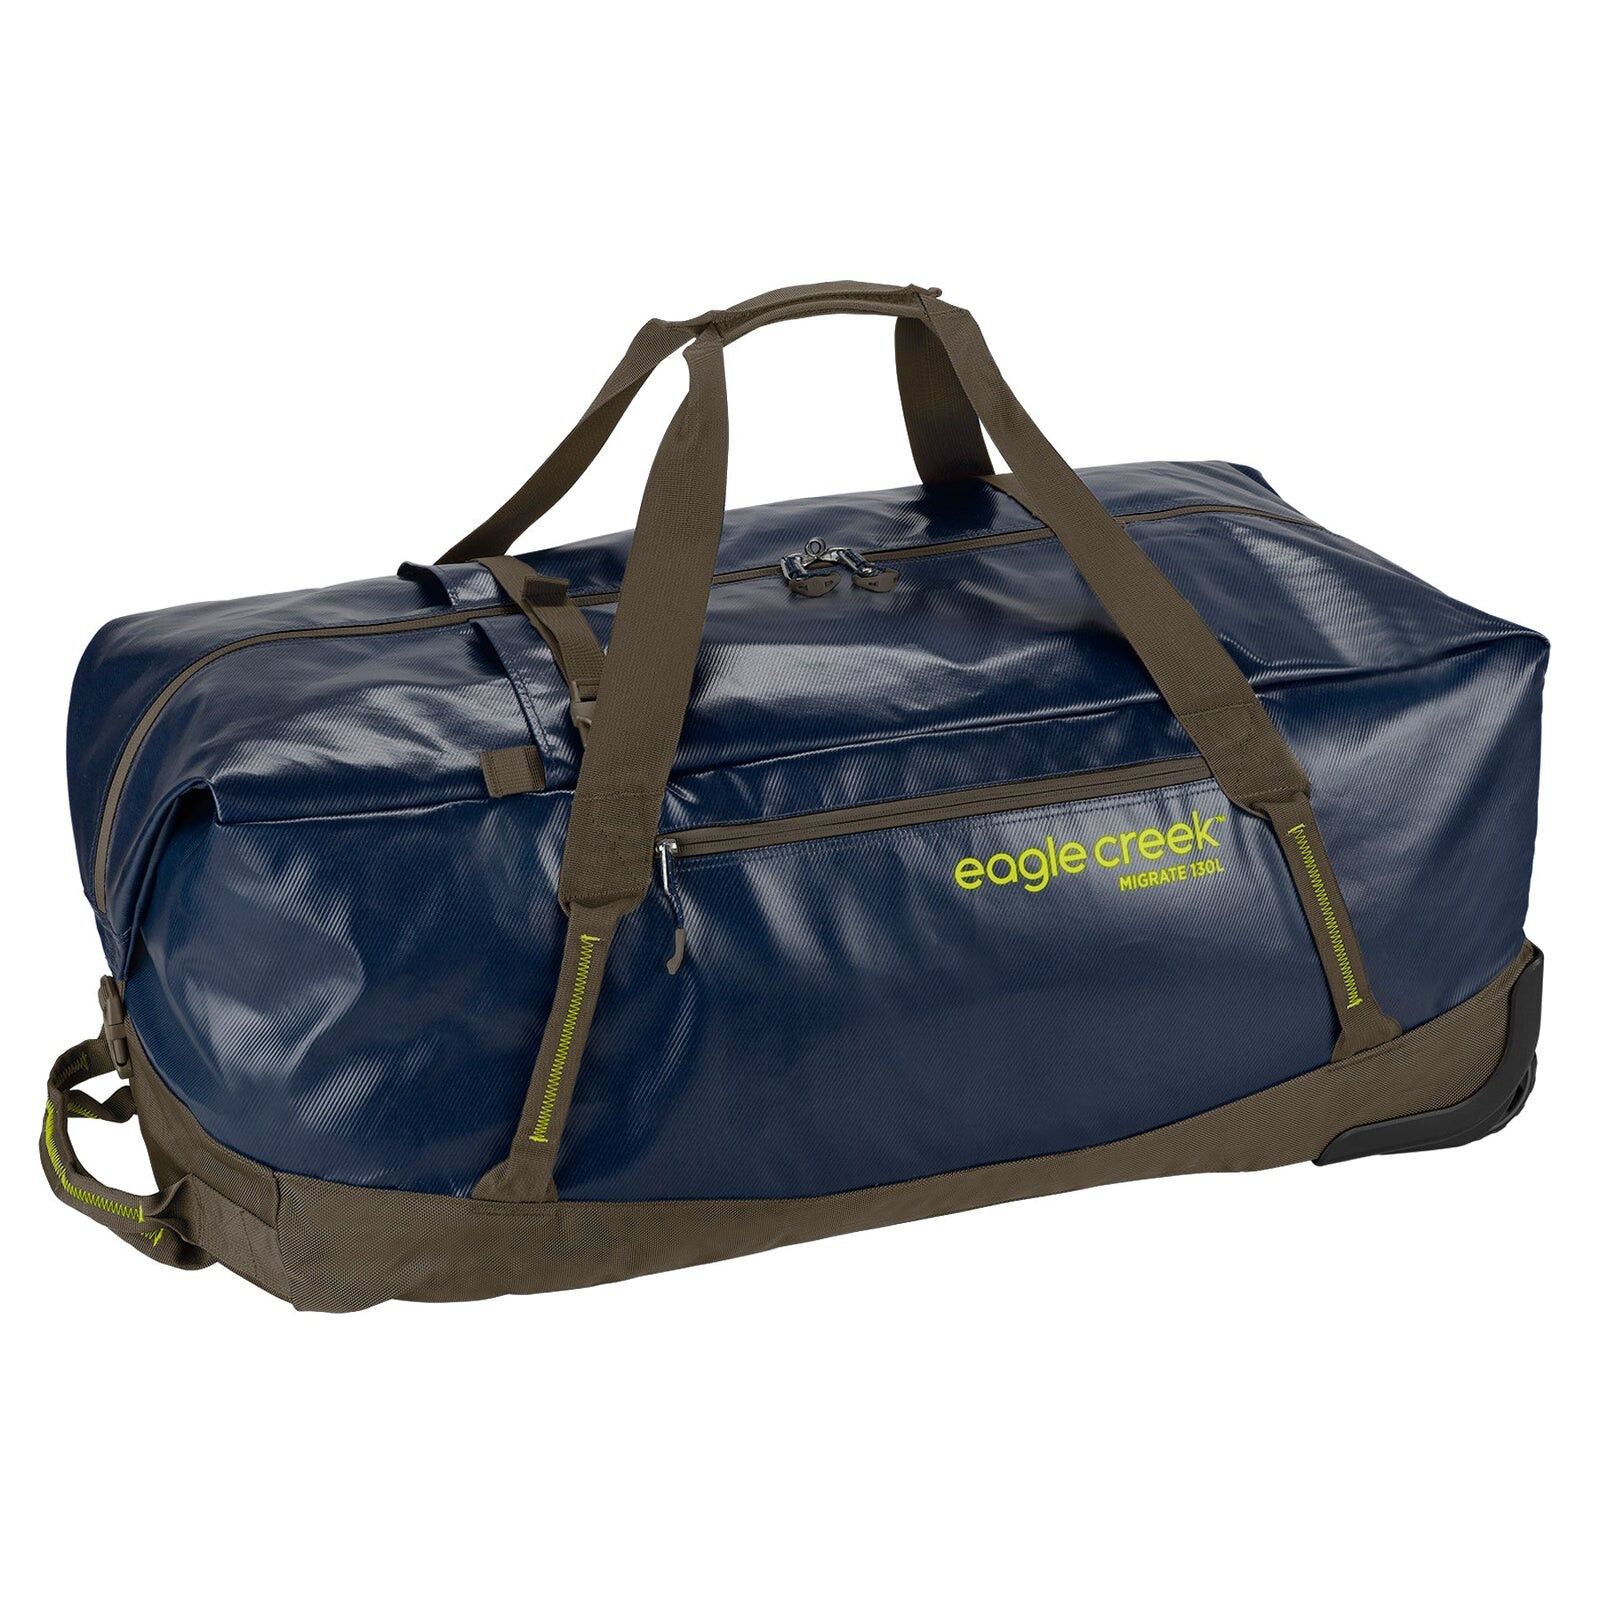 Eagle Creek Migrate Wheeled Duffel 130L - Travel bag